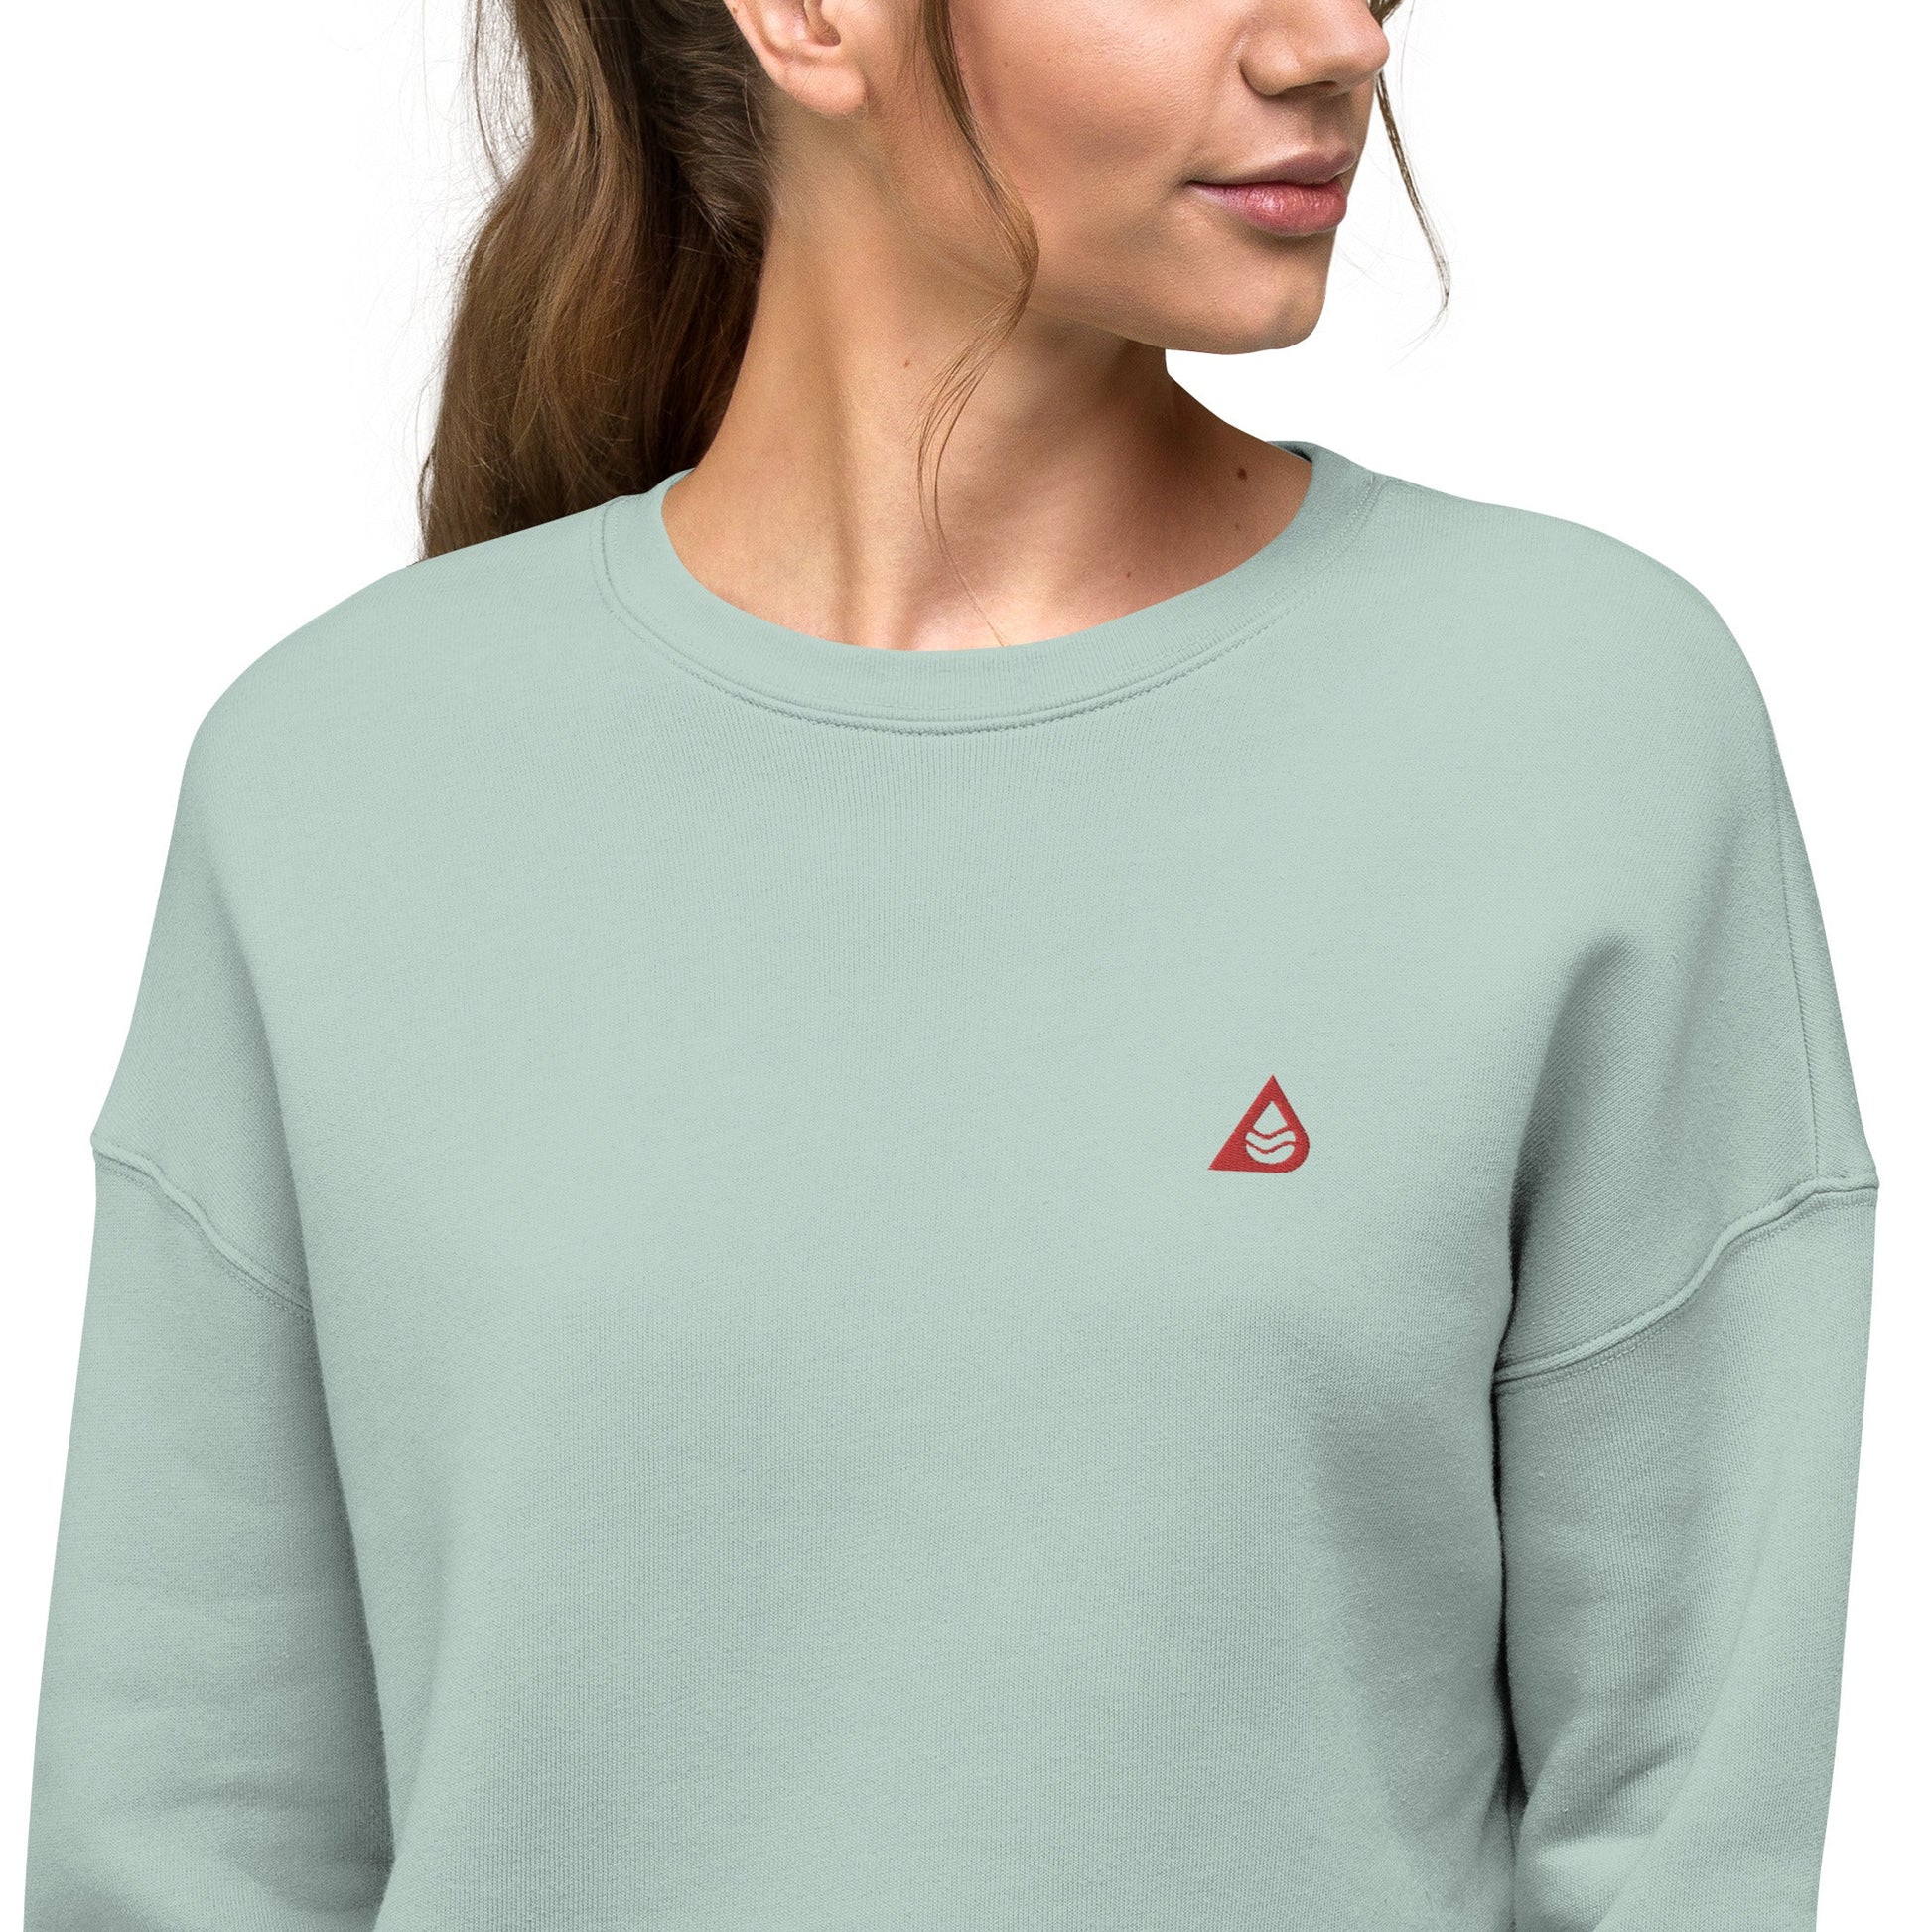 cropped-sweatshirt-AMORMARIS